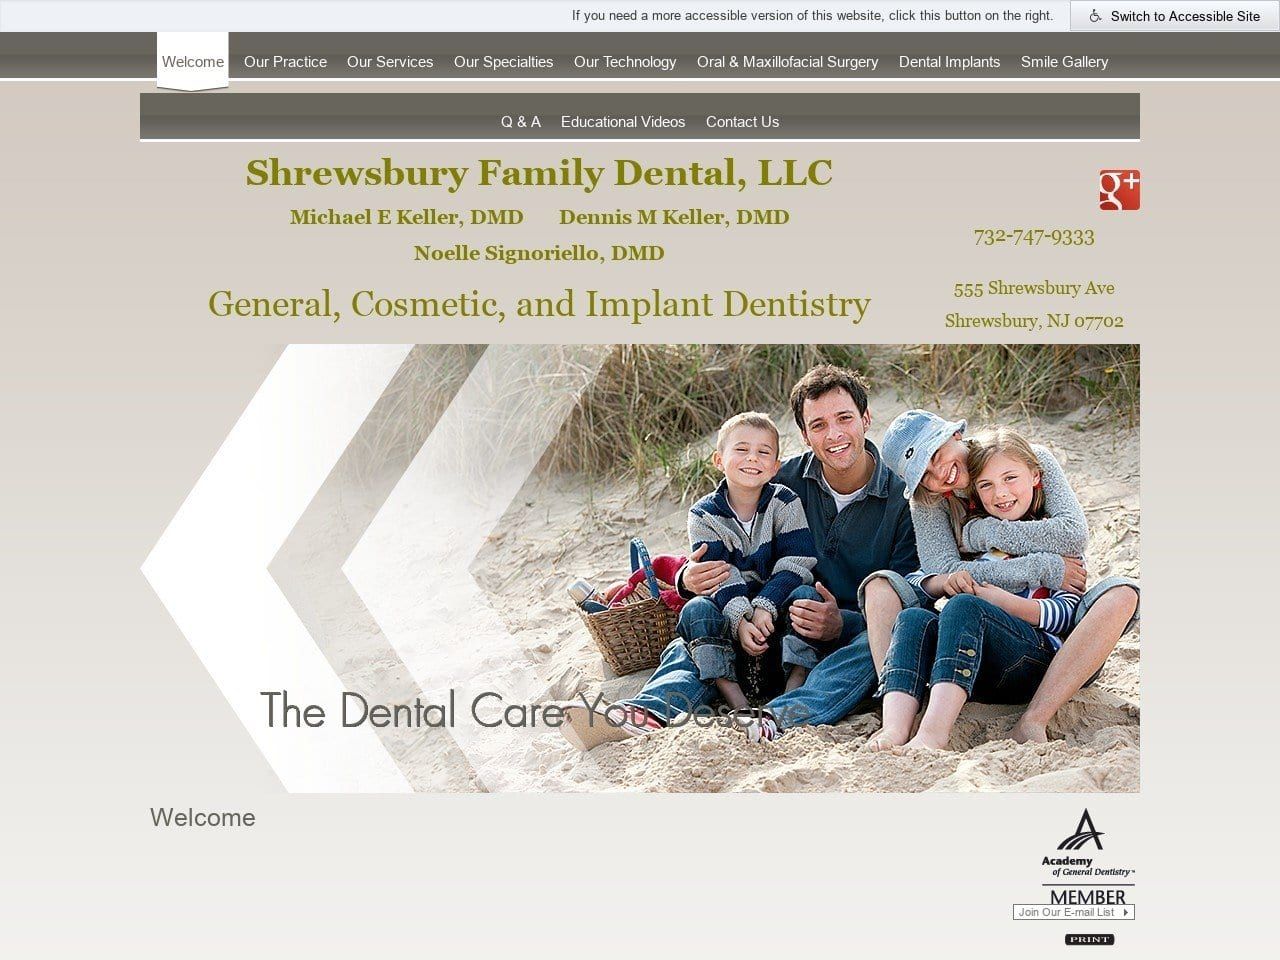 Shrewsbury Family Dental Website Screenshot from shrewsburyfamilydental.com